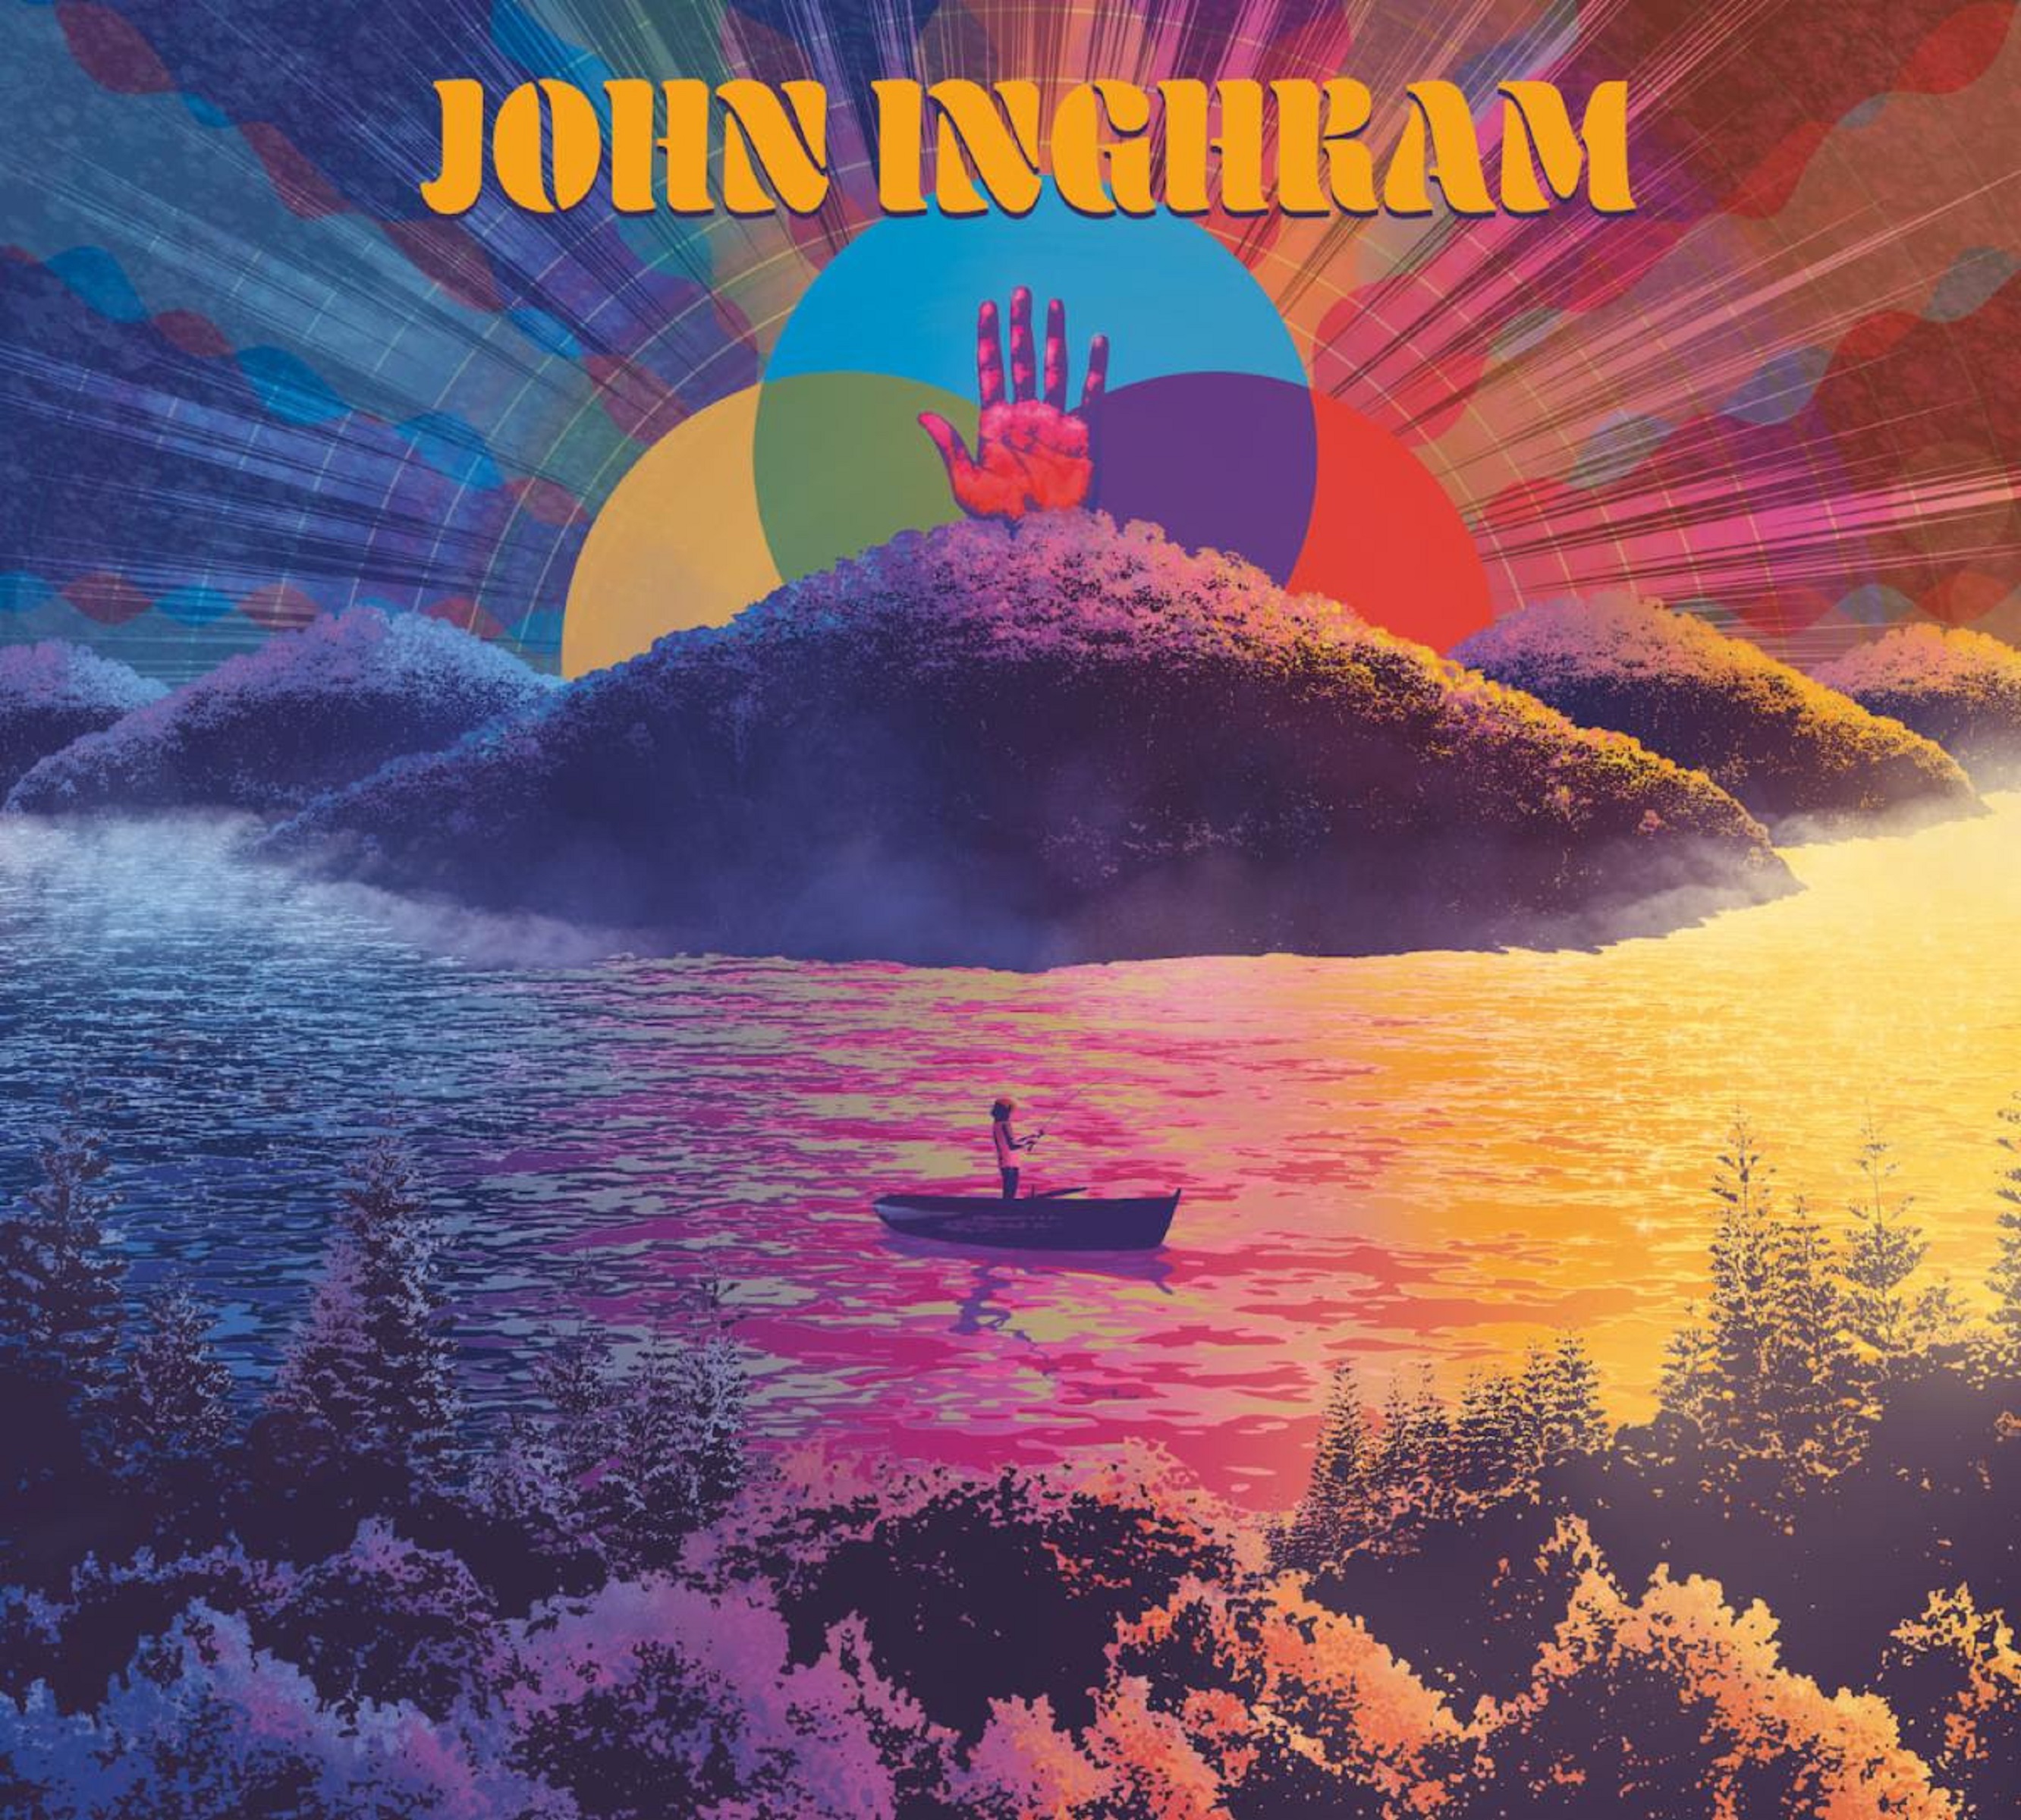 John Inghram Balances Nostalgia And Innovation On Self-Titled Debut Album